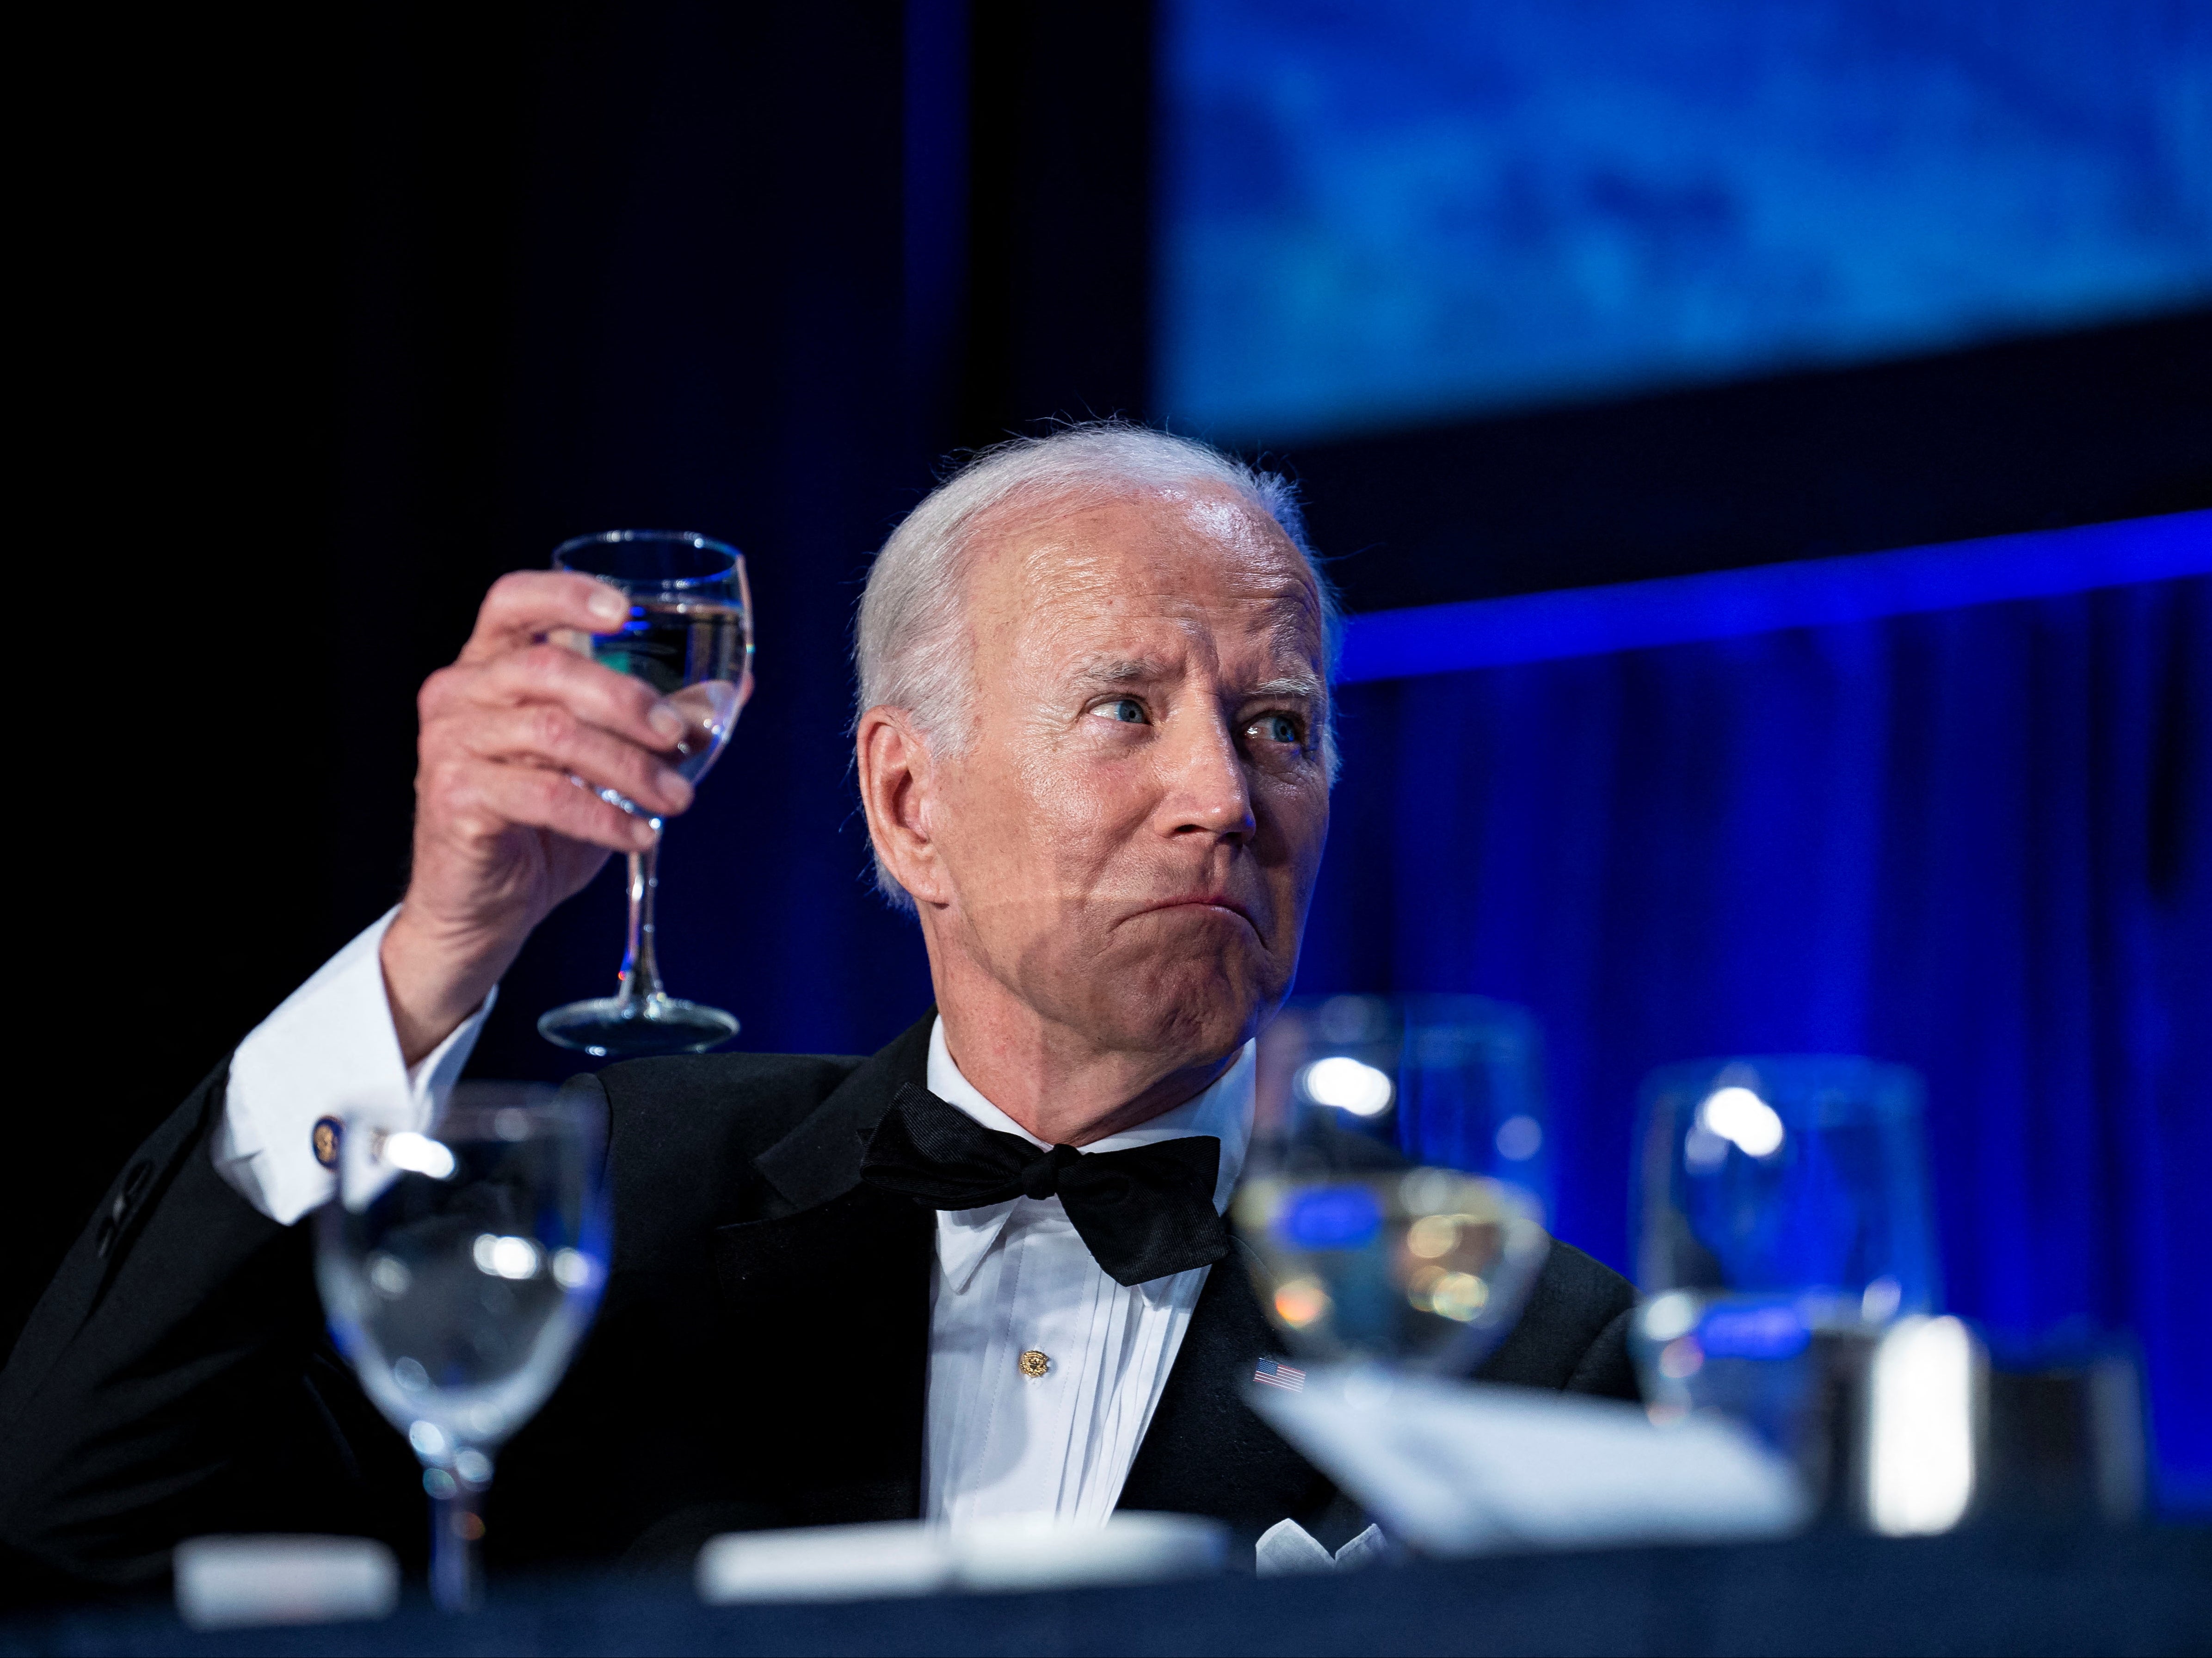 US President Joe Biden during the annual White House Correspondents Association Dinner